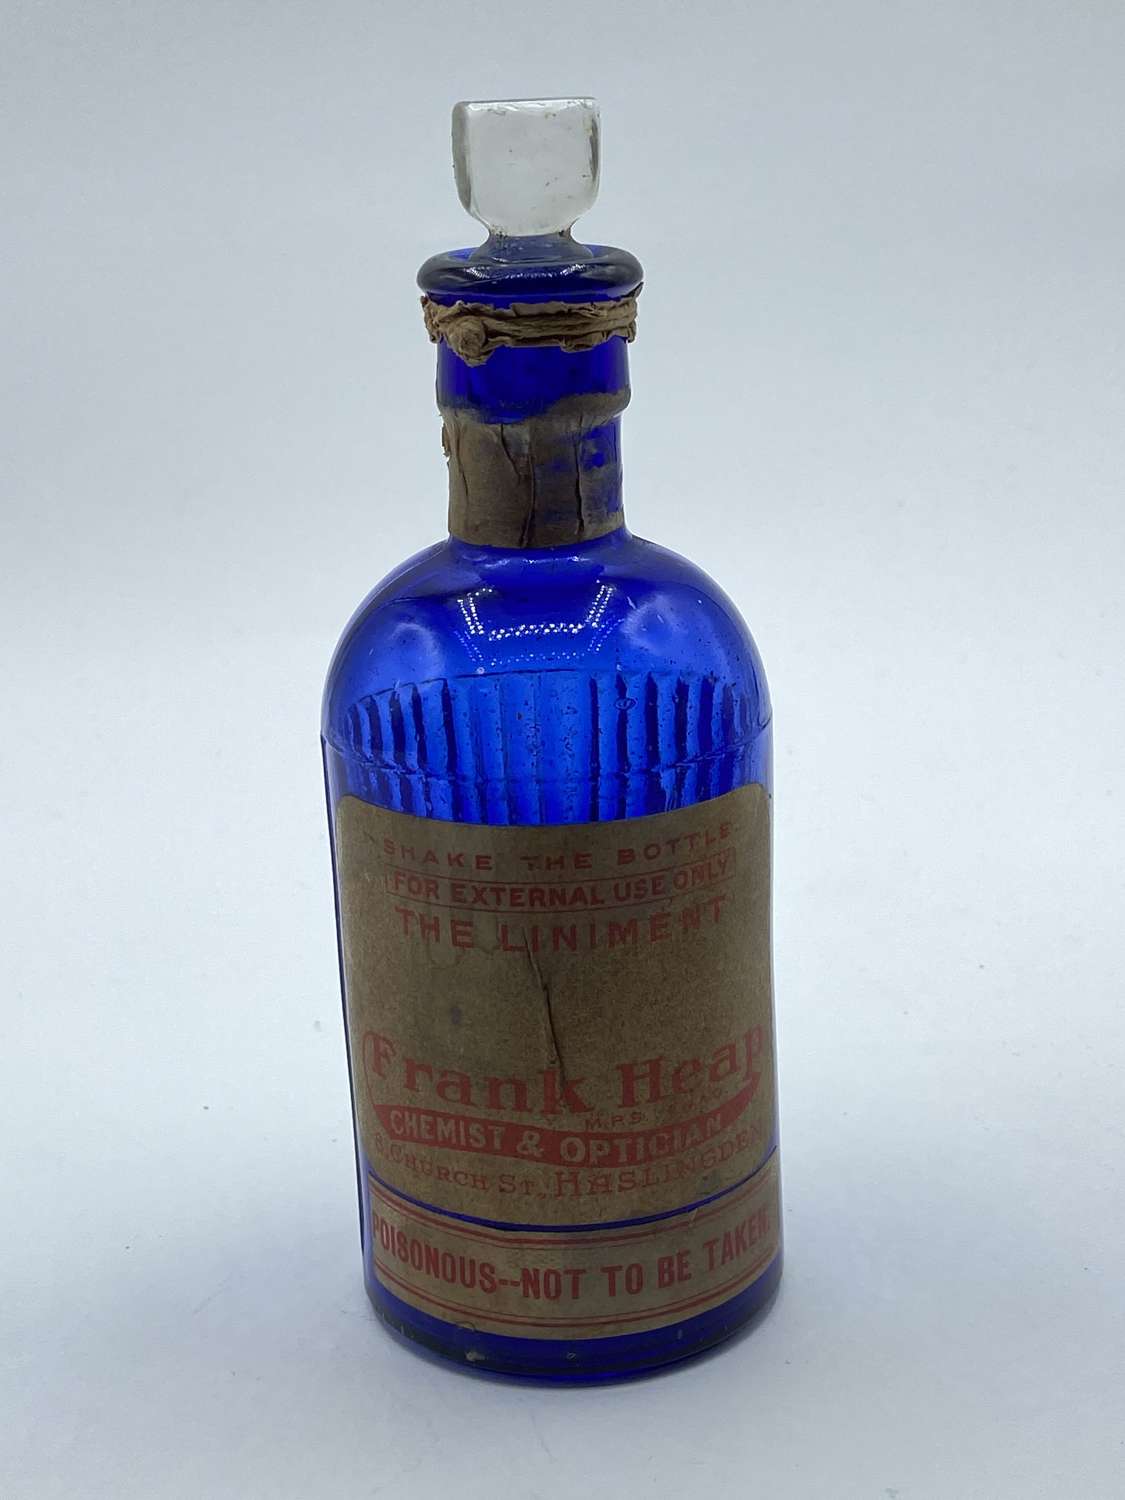 WW1 Period British Home Front Frank Heaps Liniment “Poison” Bottle